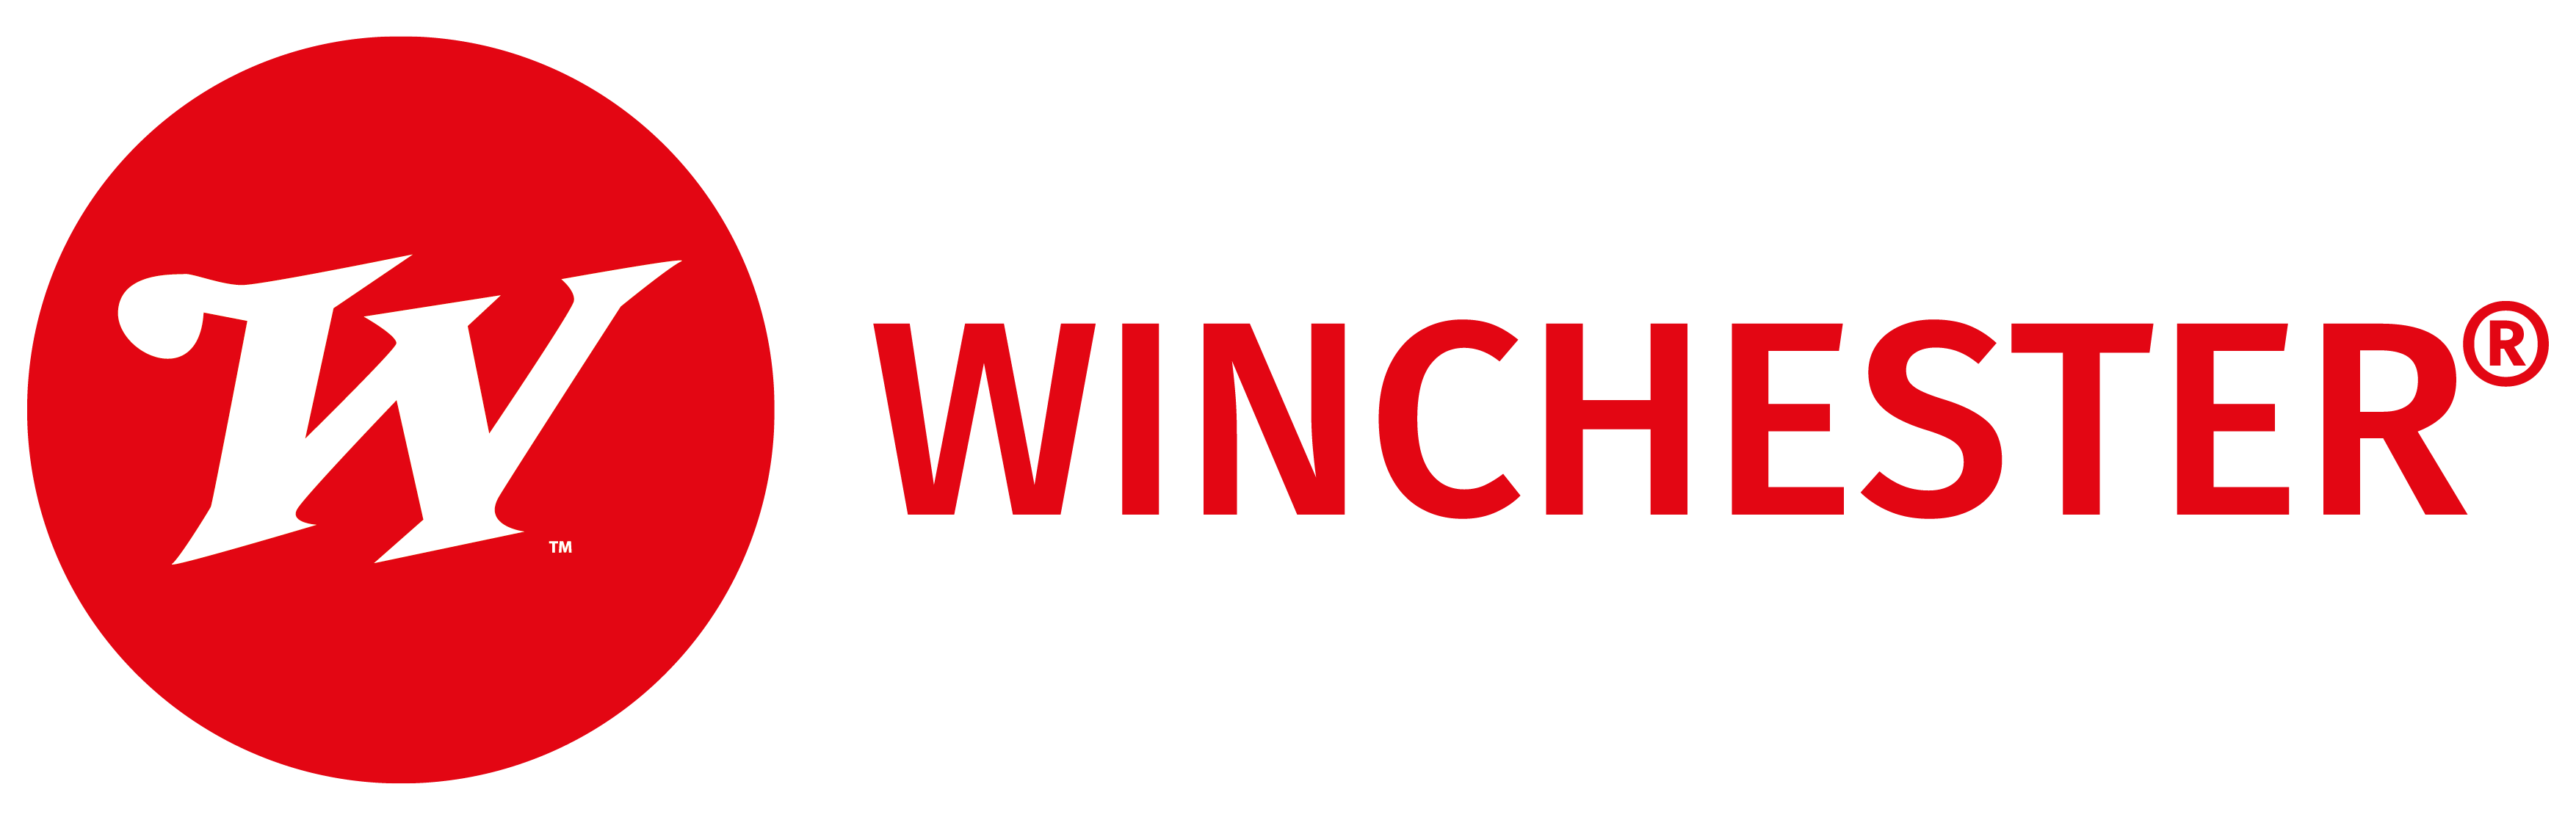 logo_winchester_2019-01